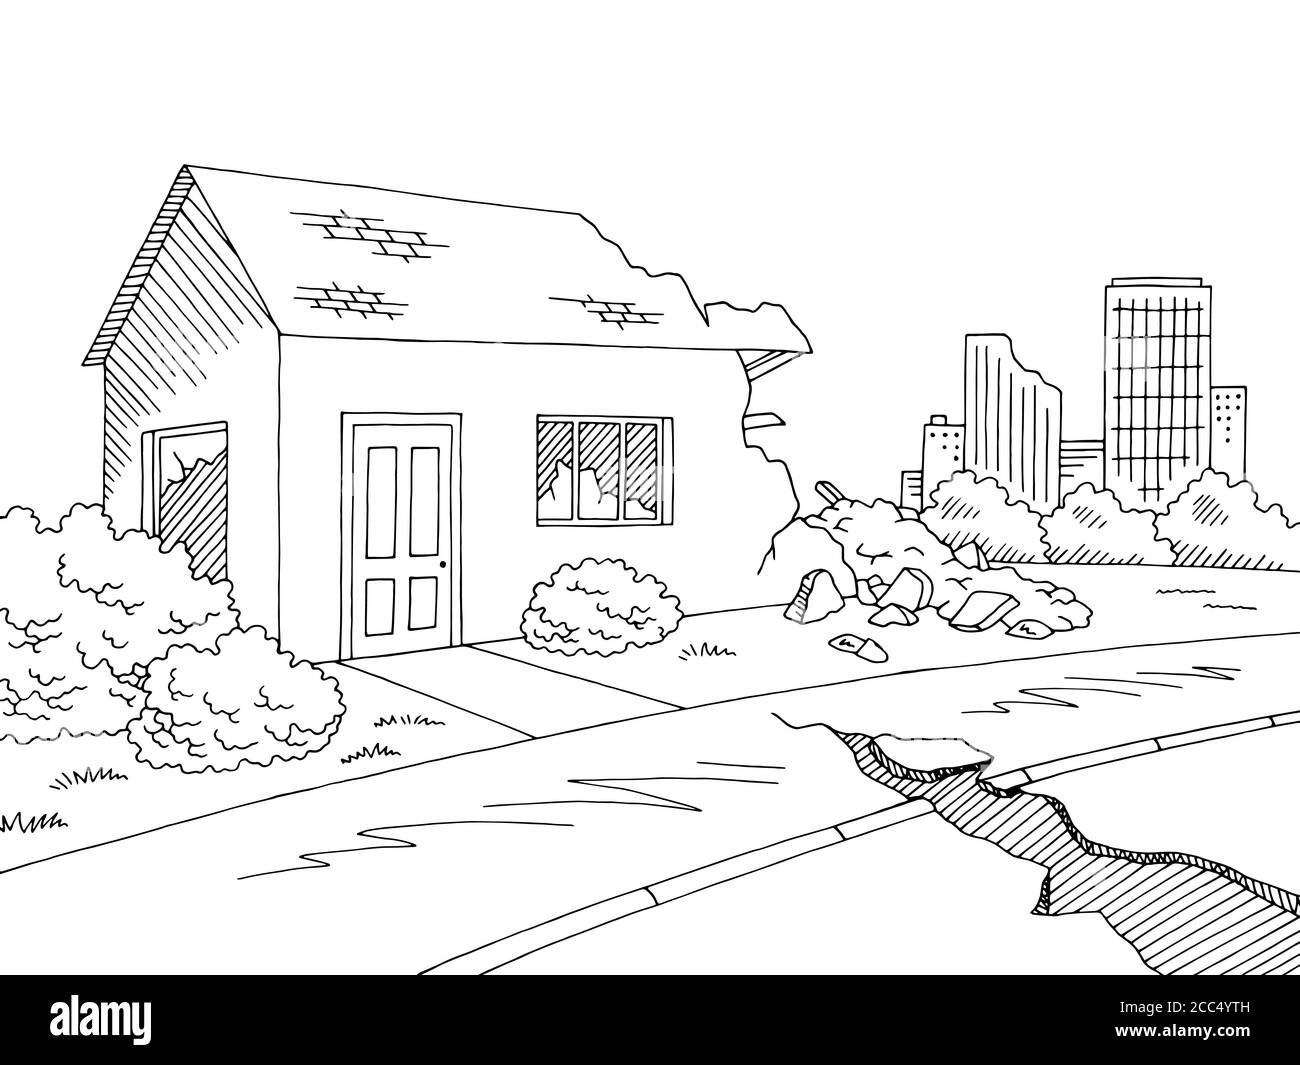 Earthquake graphic black white landscape city sketch illustration vector Stock Vector